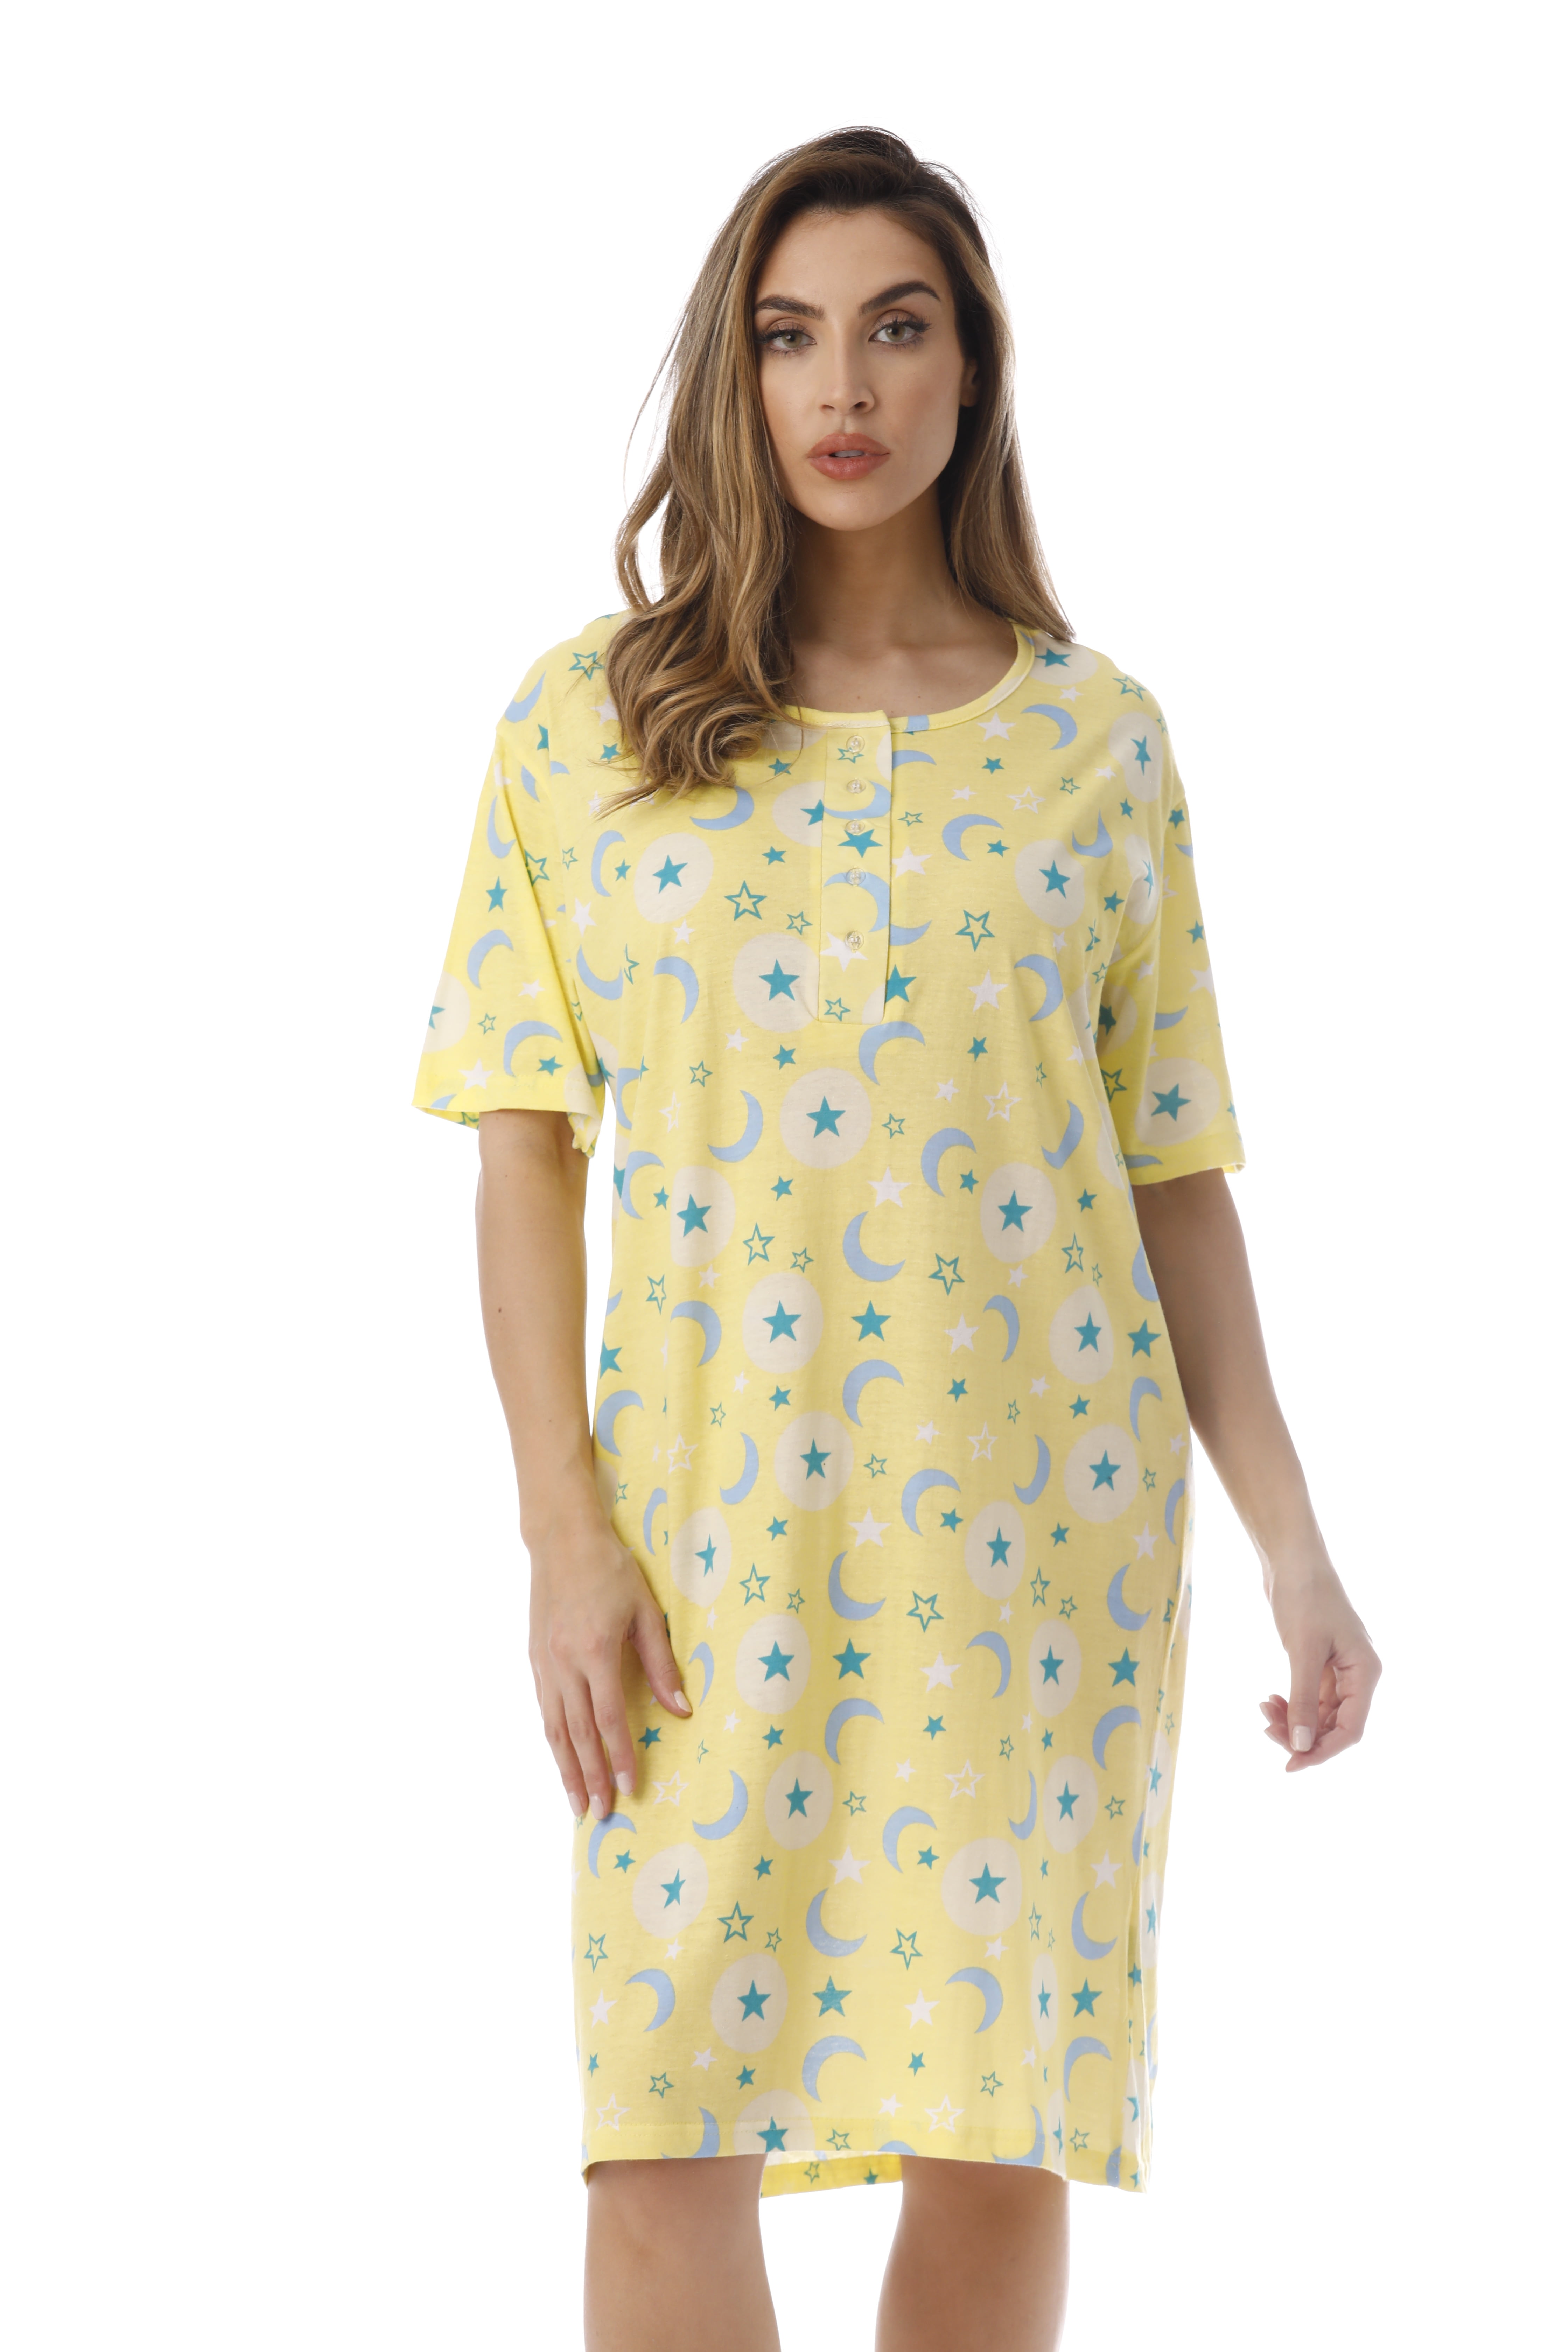 Womens Short Sleeve Cotton Nightgown Sleep Dress/Sleepwear,XL,Rebel Hearts